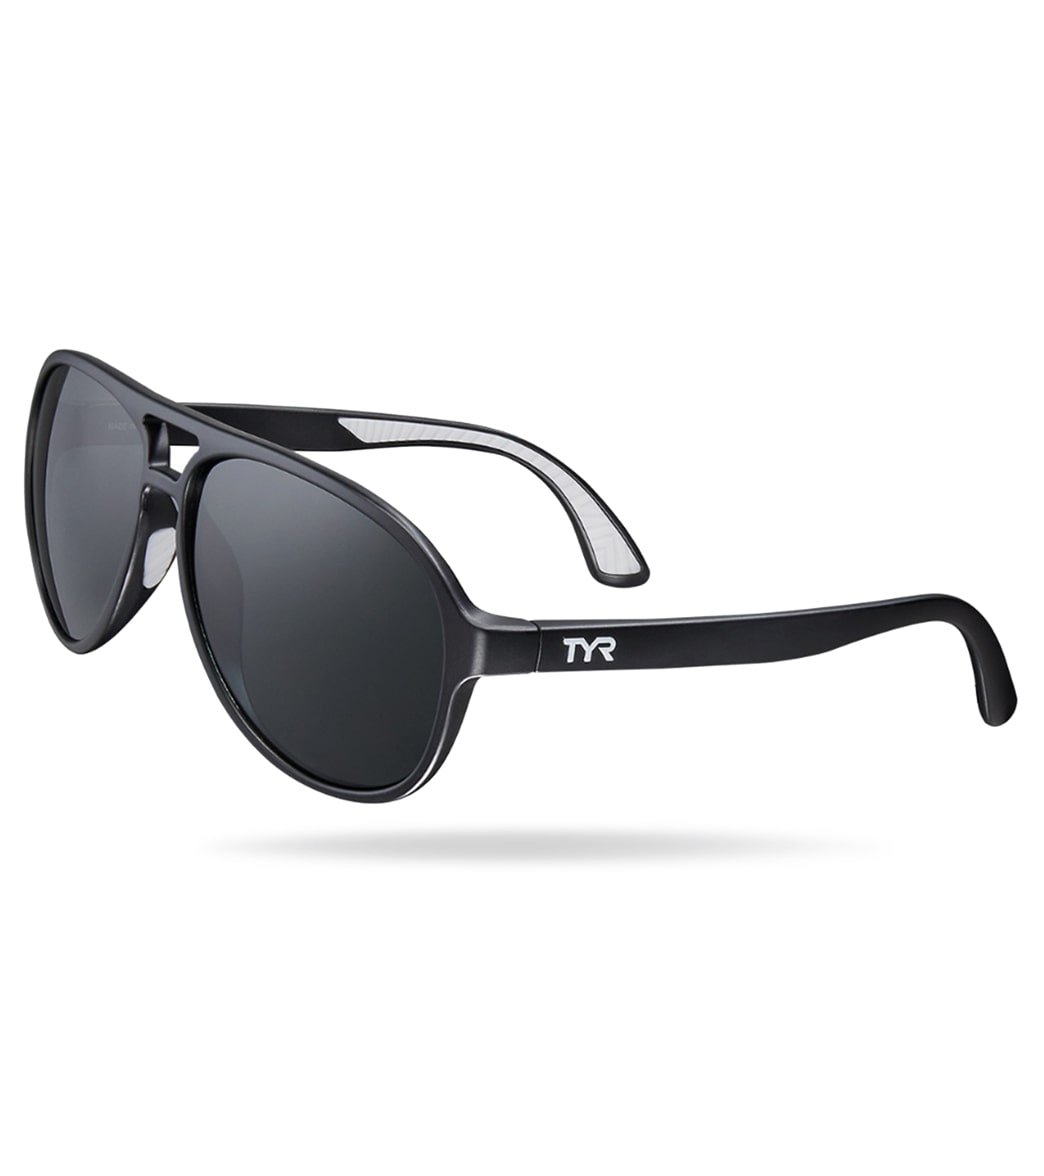 TYR Men's Goldenwest Aviator Large Sunglasses - Smoke/Black - Swimoutlet.com